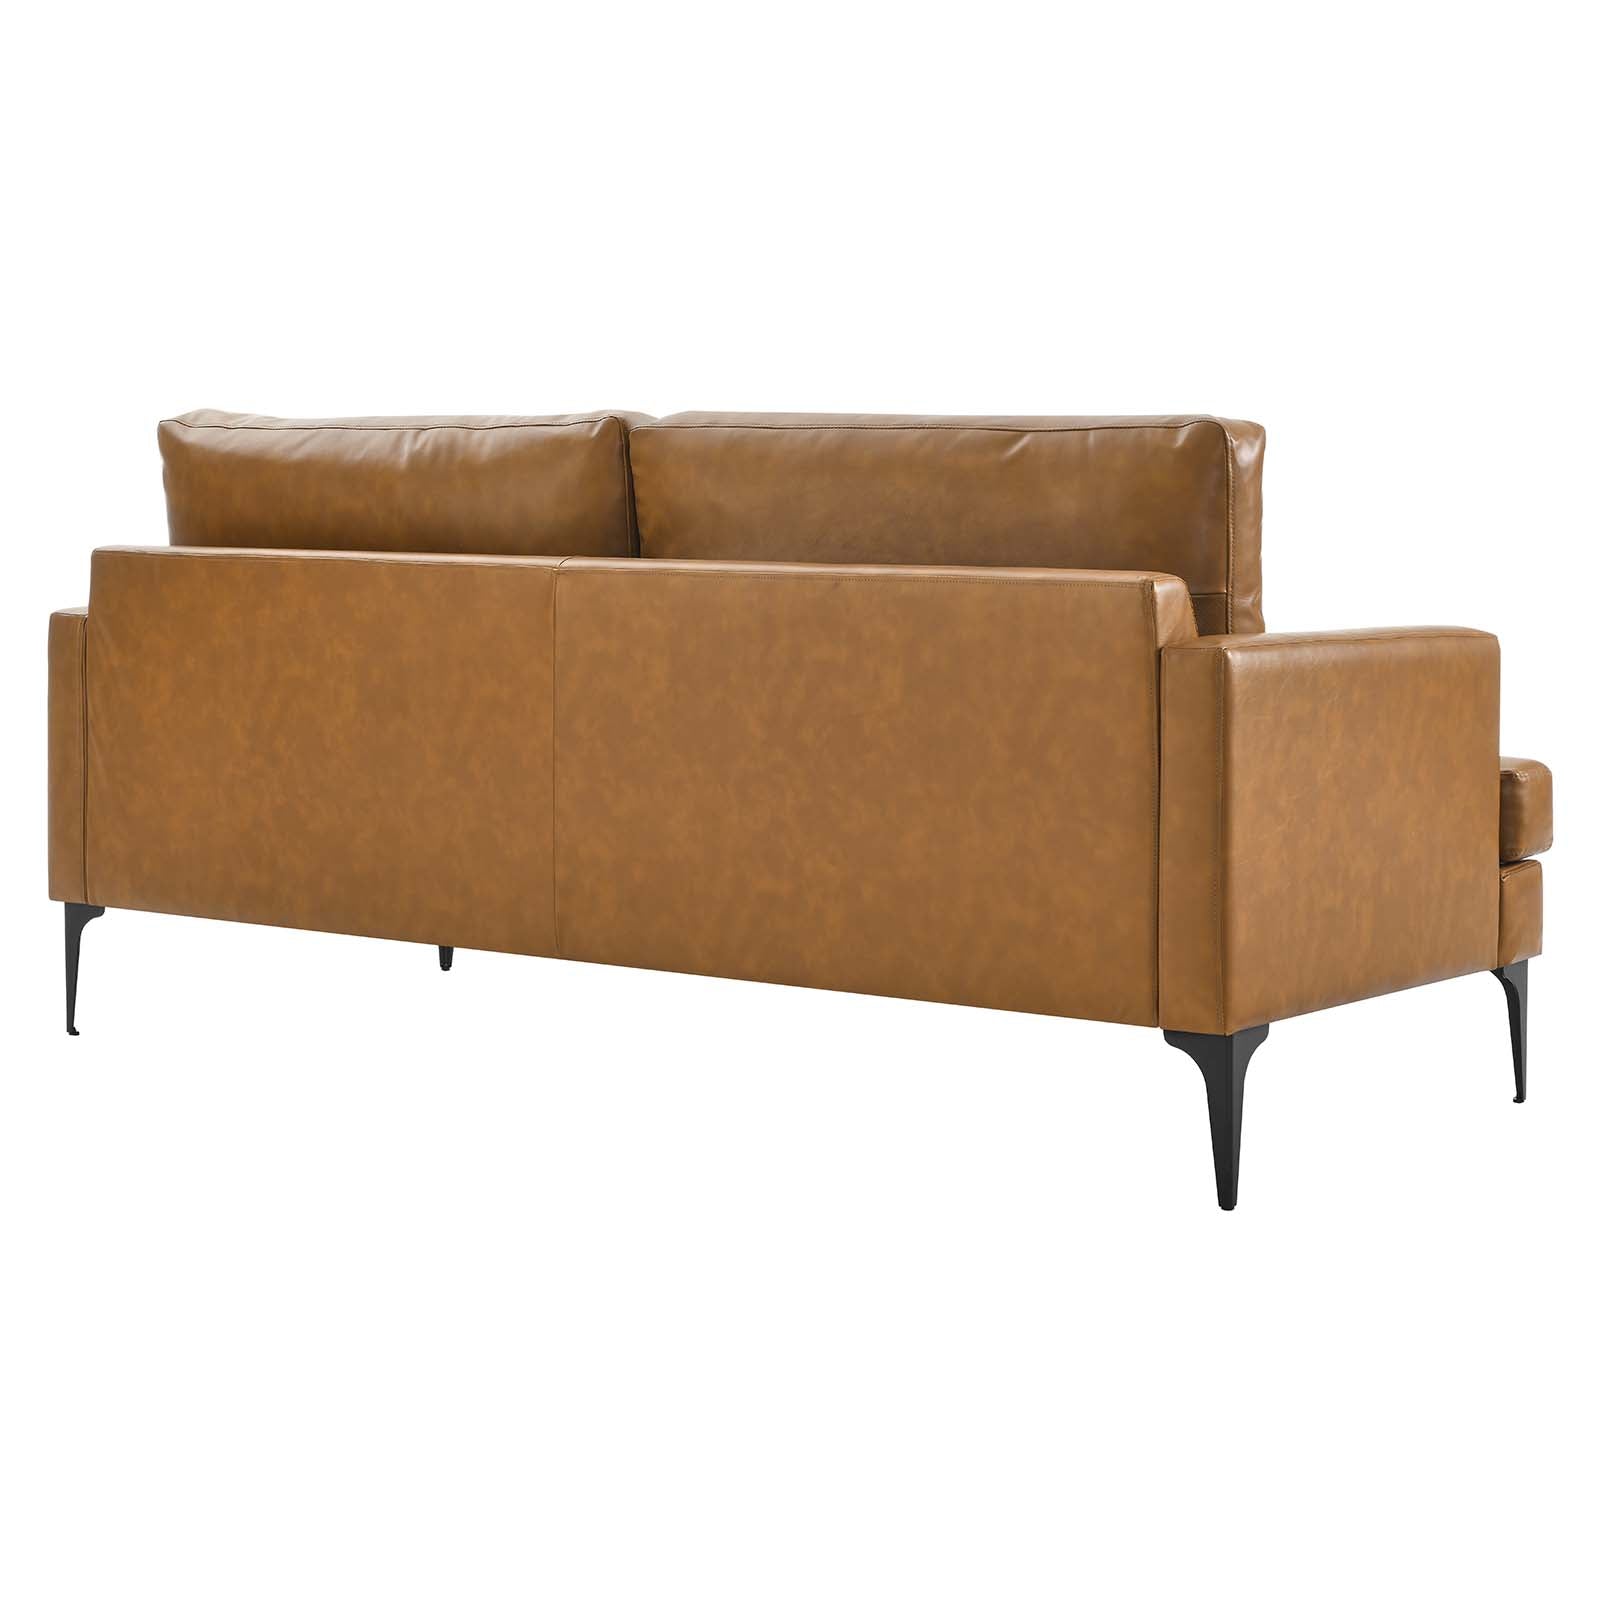 Evermore Vegan Leather Sofa-Sofa-Modway-Wall2Wall Furnishings